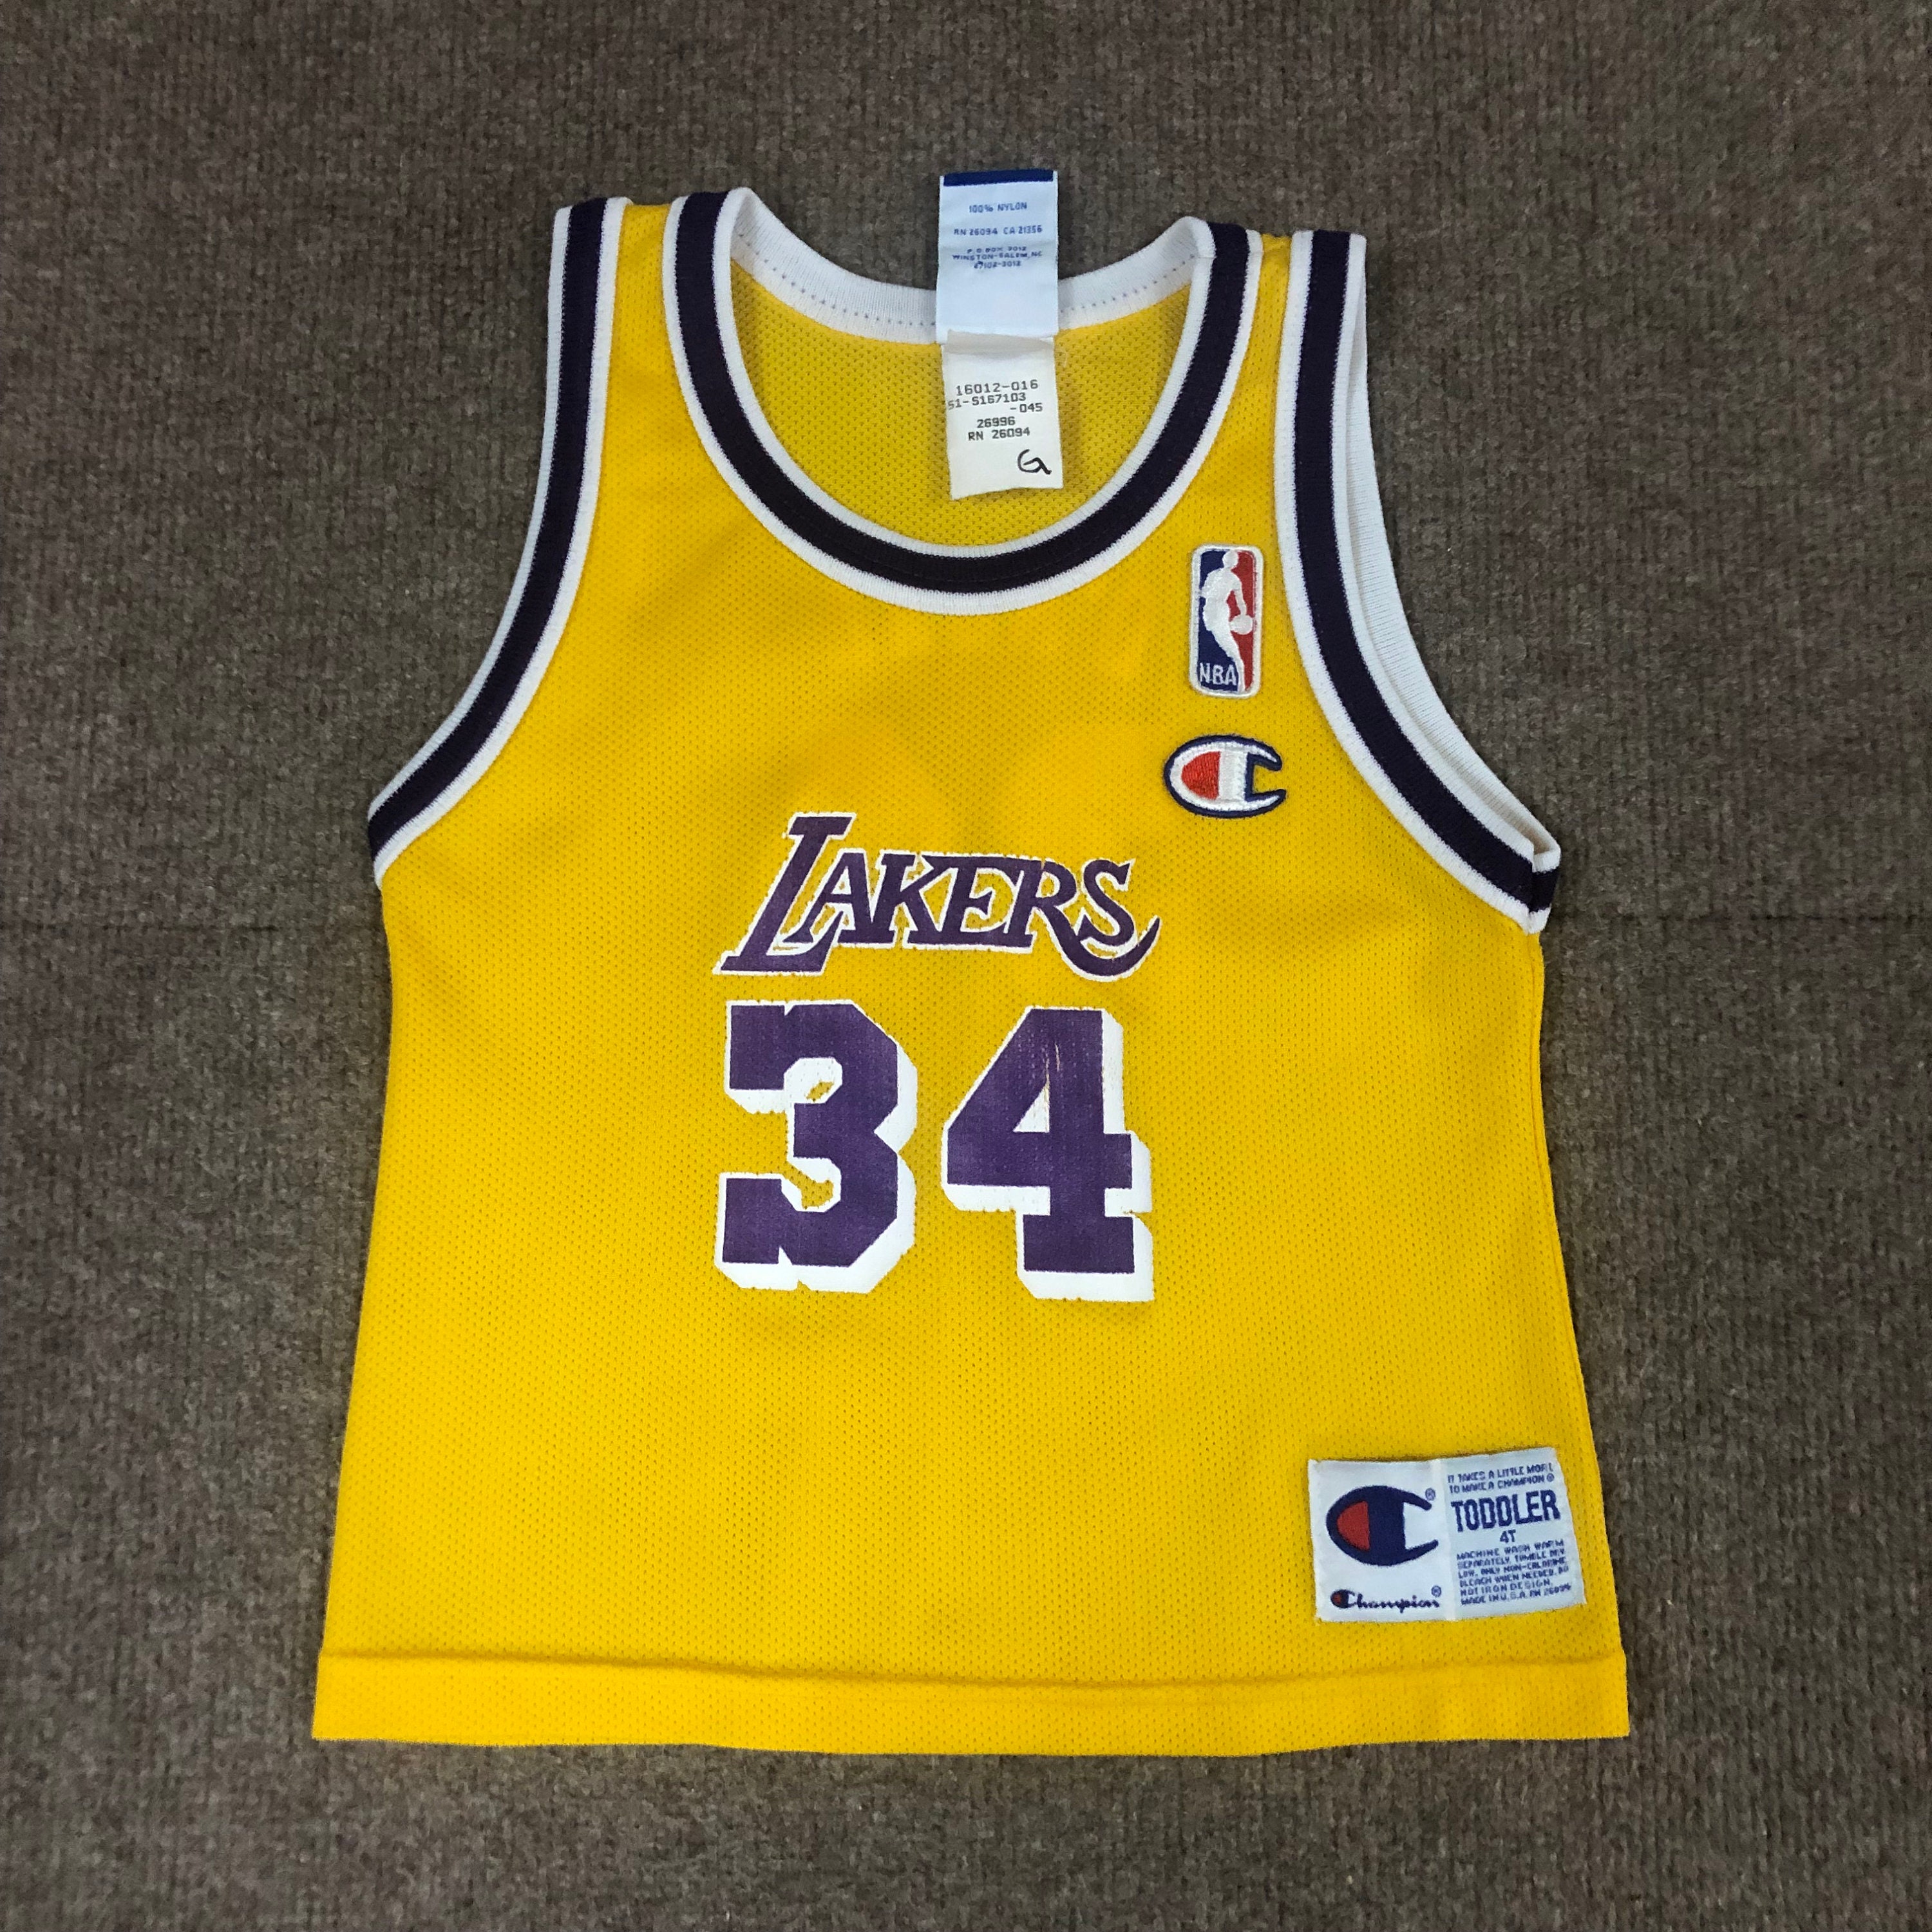 Vintage NBA LA Lakers Shaquille Oneal 34 Sweatshirt Lakers 